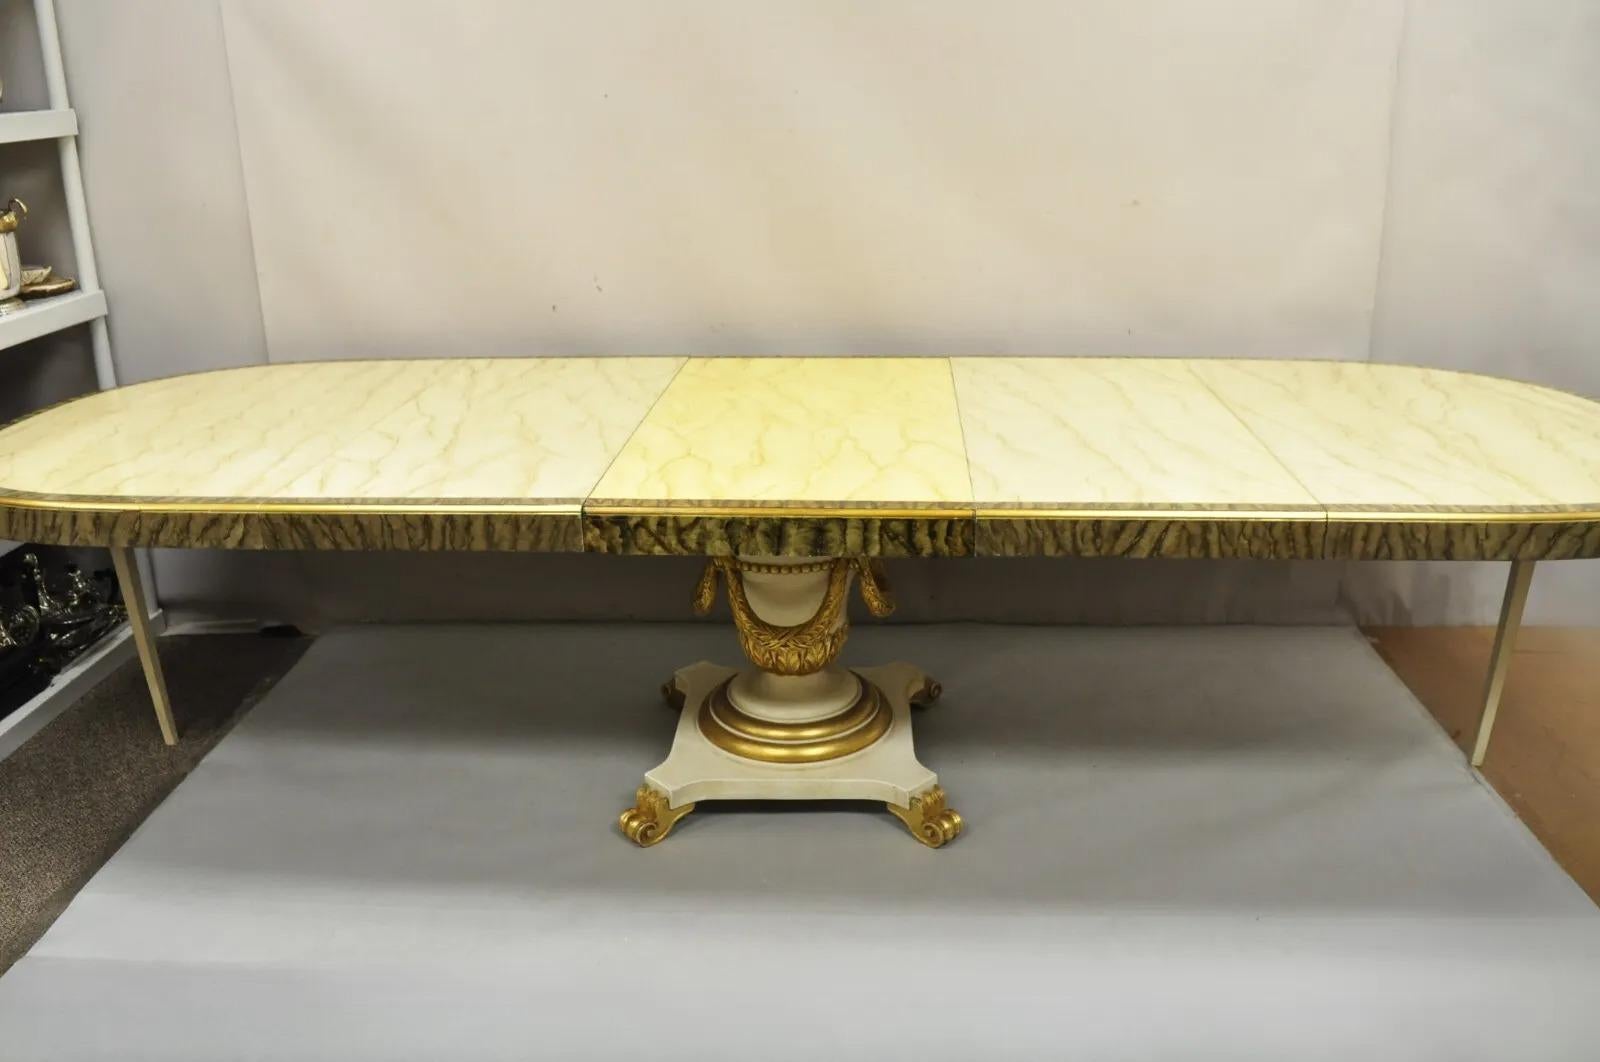 Italian Regency Cream & Gold Gilt Lacquered Urn Pedestal Dining Table - 3 Leaves For Sale 11